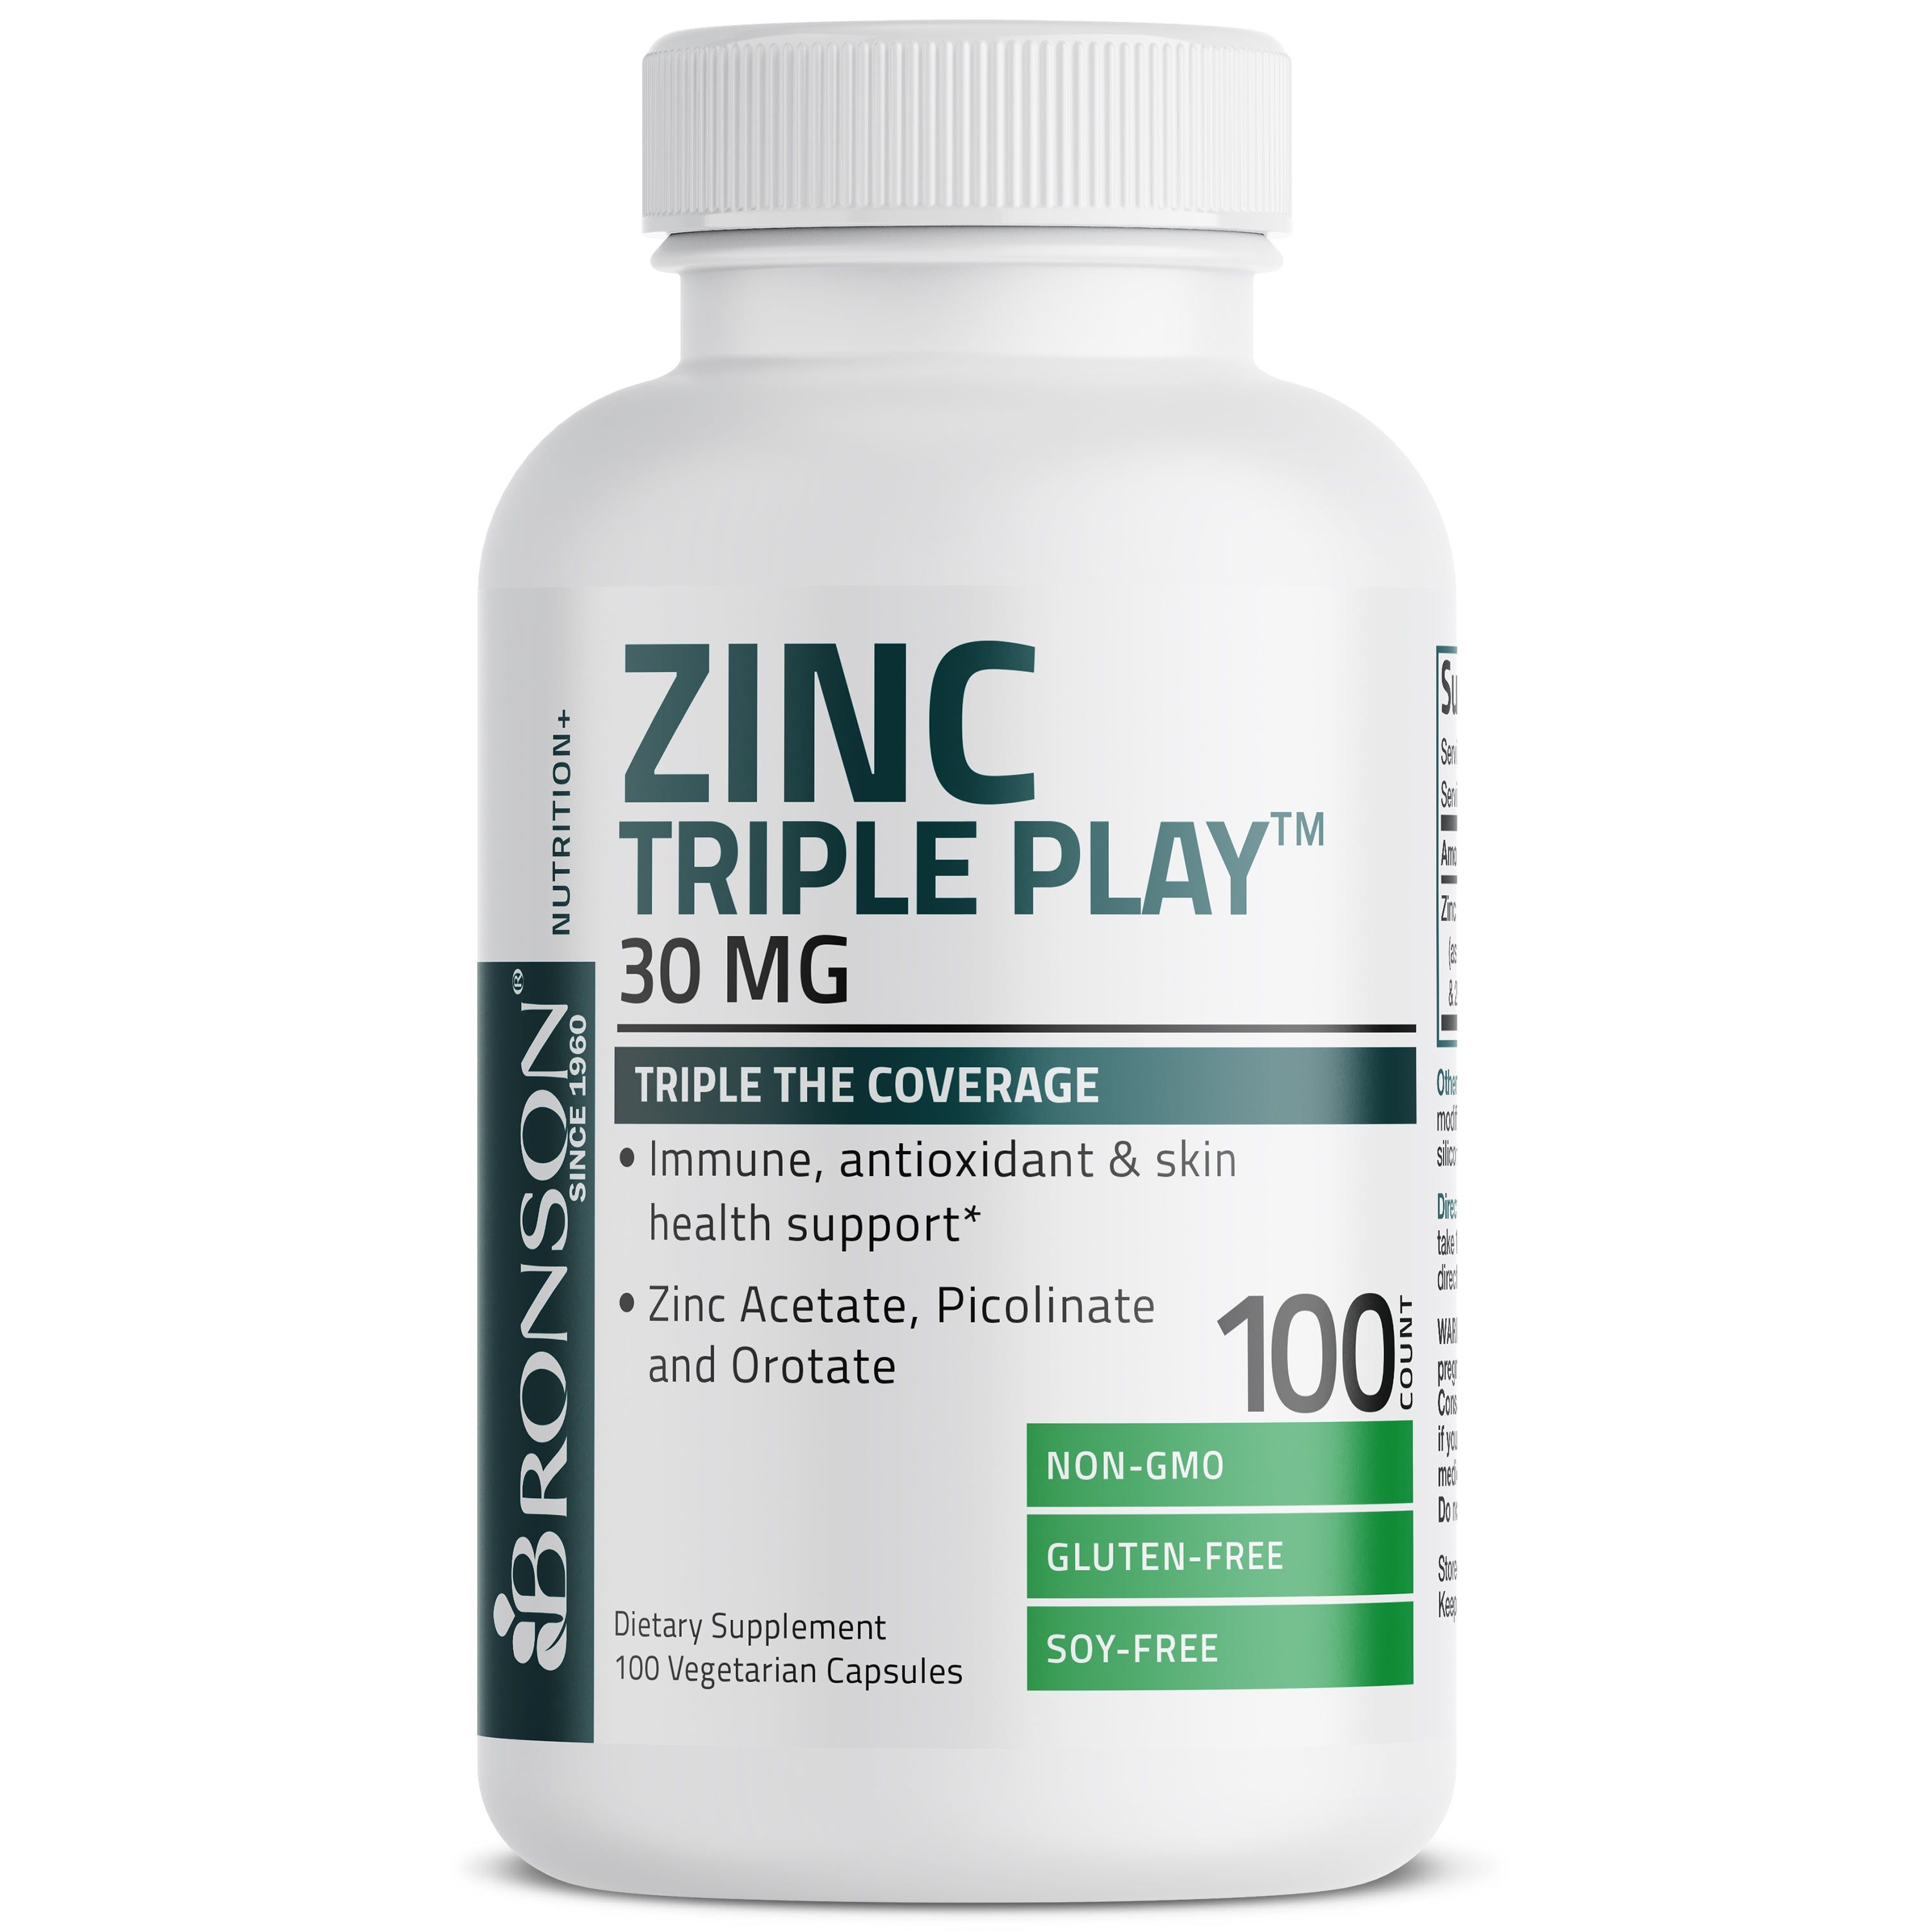 Zinc Triple Play - 30 mg view 11 of 7